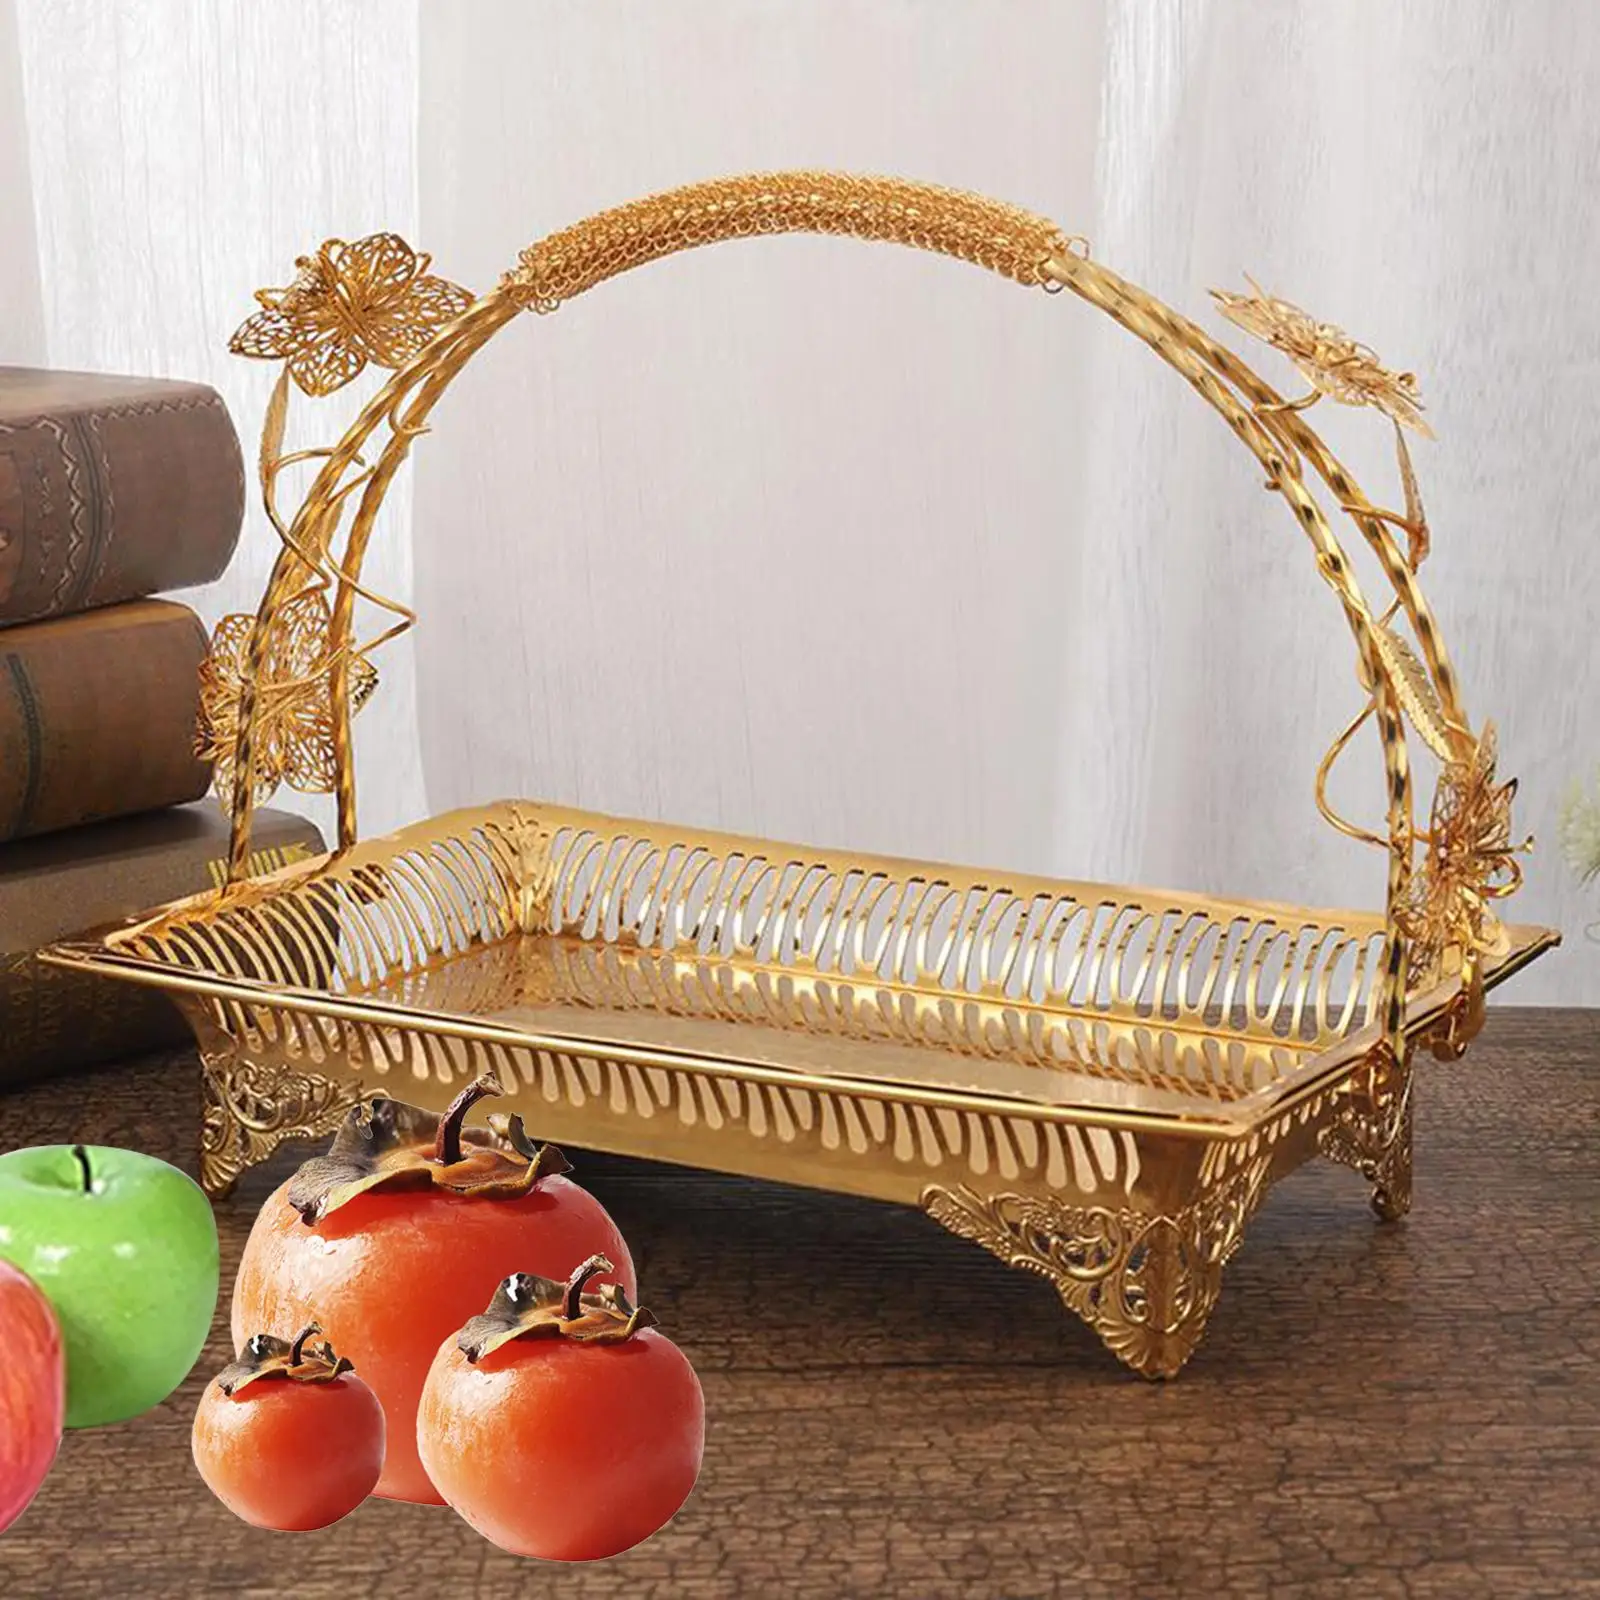 Fashion Fruit Serving Basket Candy Plate Basket Party Decorative Tray Home Decor Snack Display Basket for Dining Room Restaurant